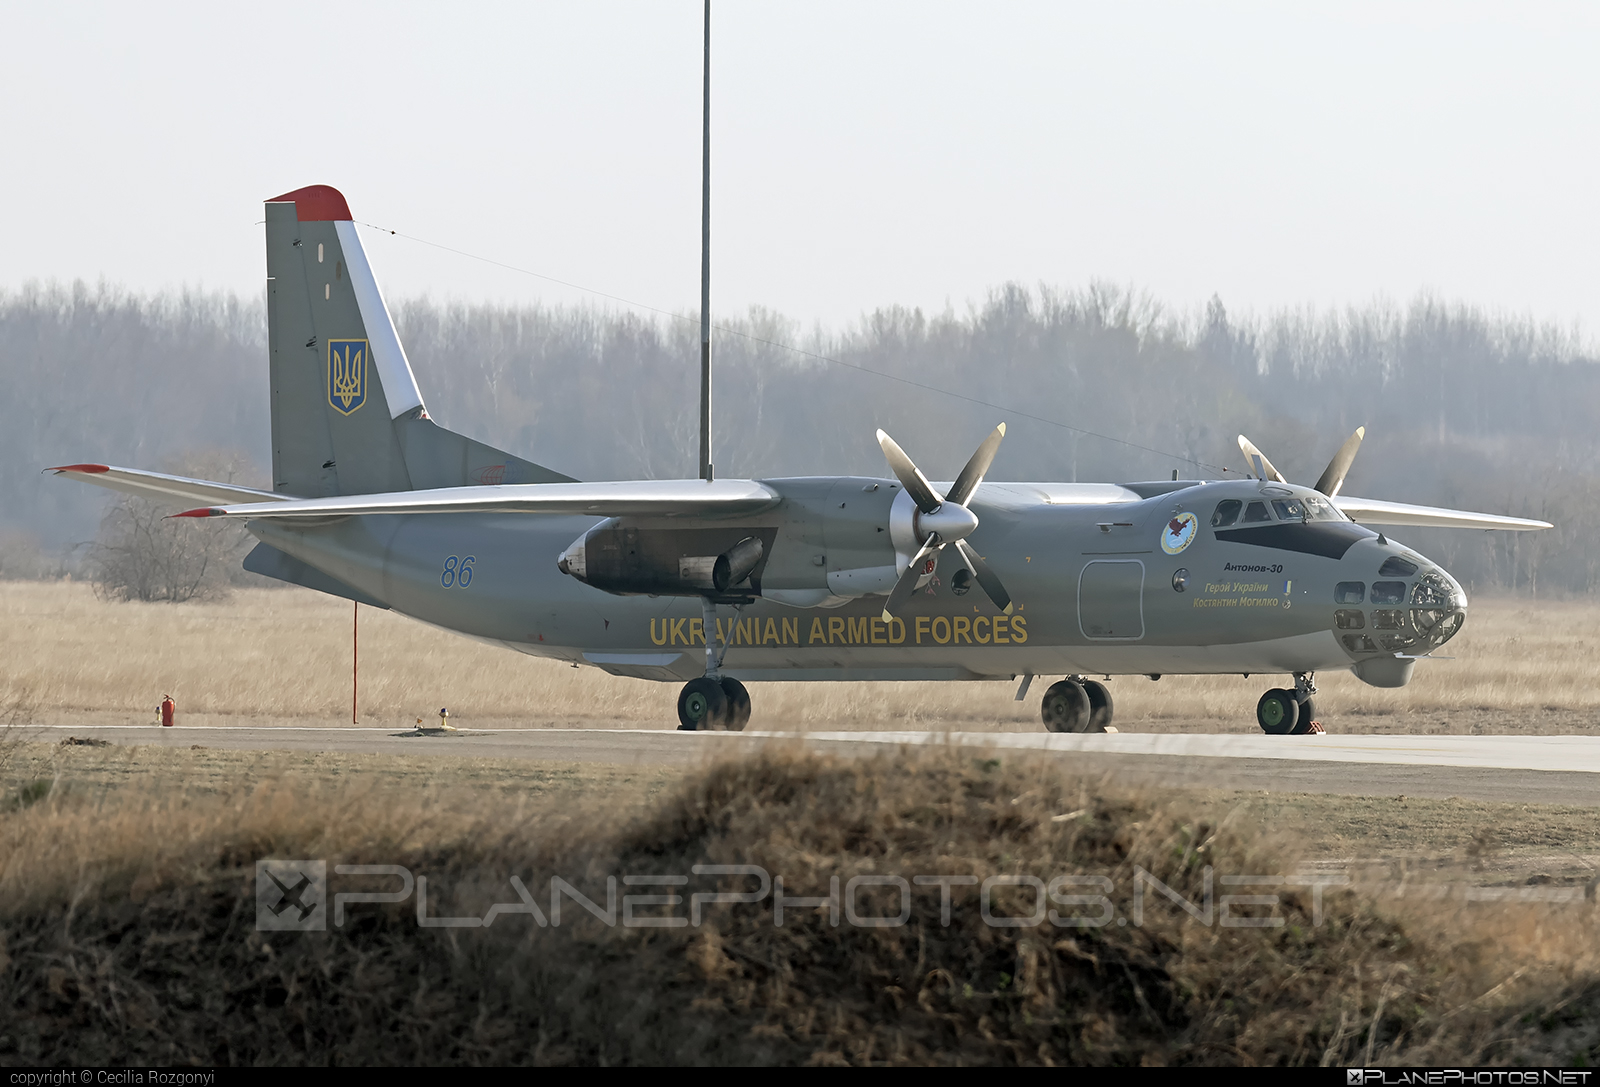 Antonov An-30 - 86 operated by Povitryani Syly Ukrayiny (Ukrainian Air Force) #an30 #antonov #antonov30 #povitryanisylyukrayiny #ukrainianairforce